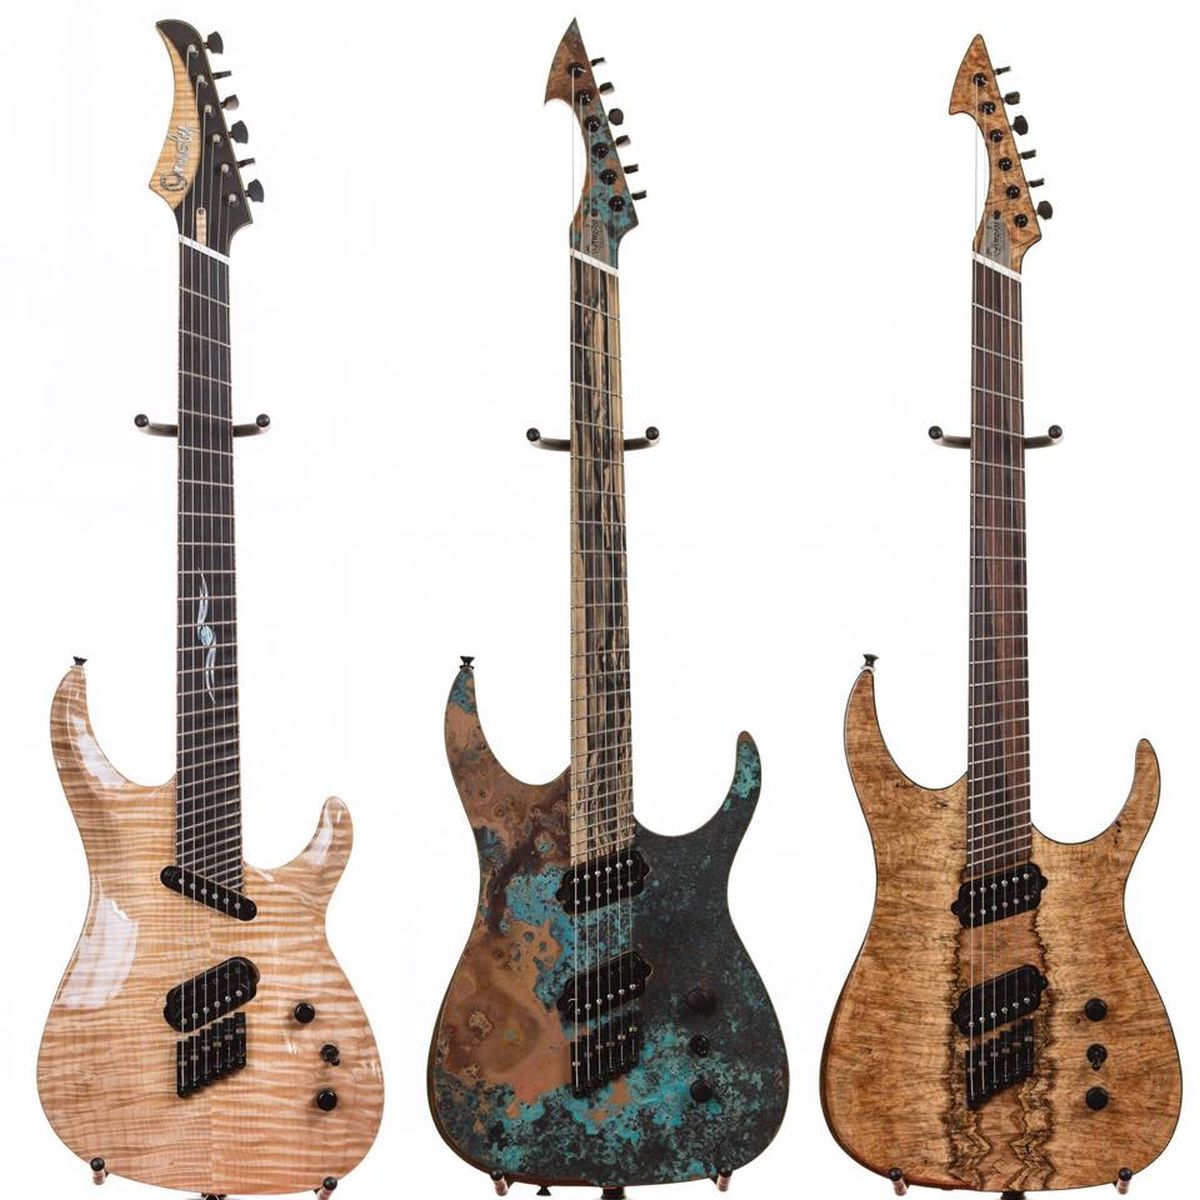 Drei Gitarren mit Fanned Frets der Marke Ormsby, Copyright by Ormsby-Guitars